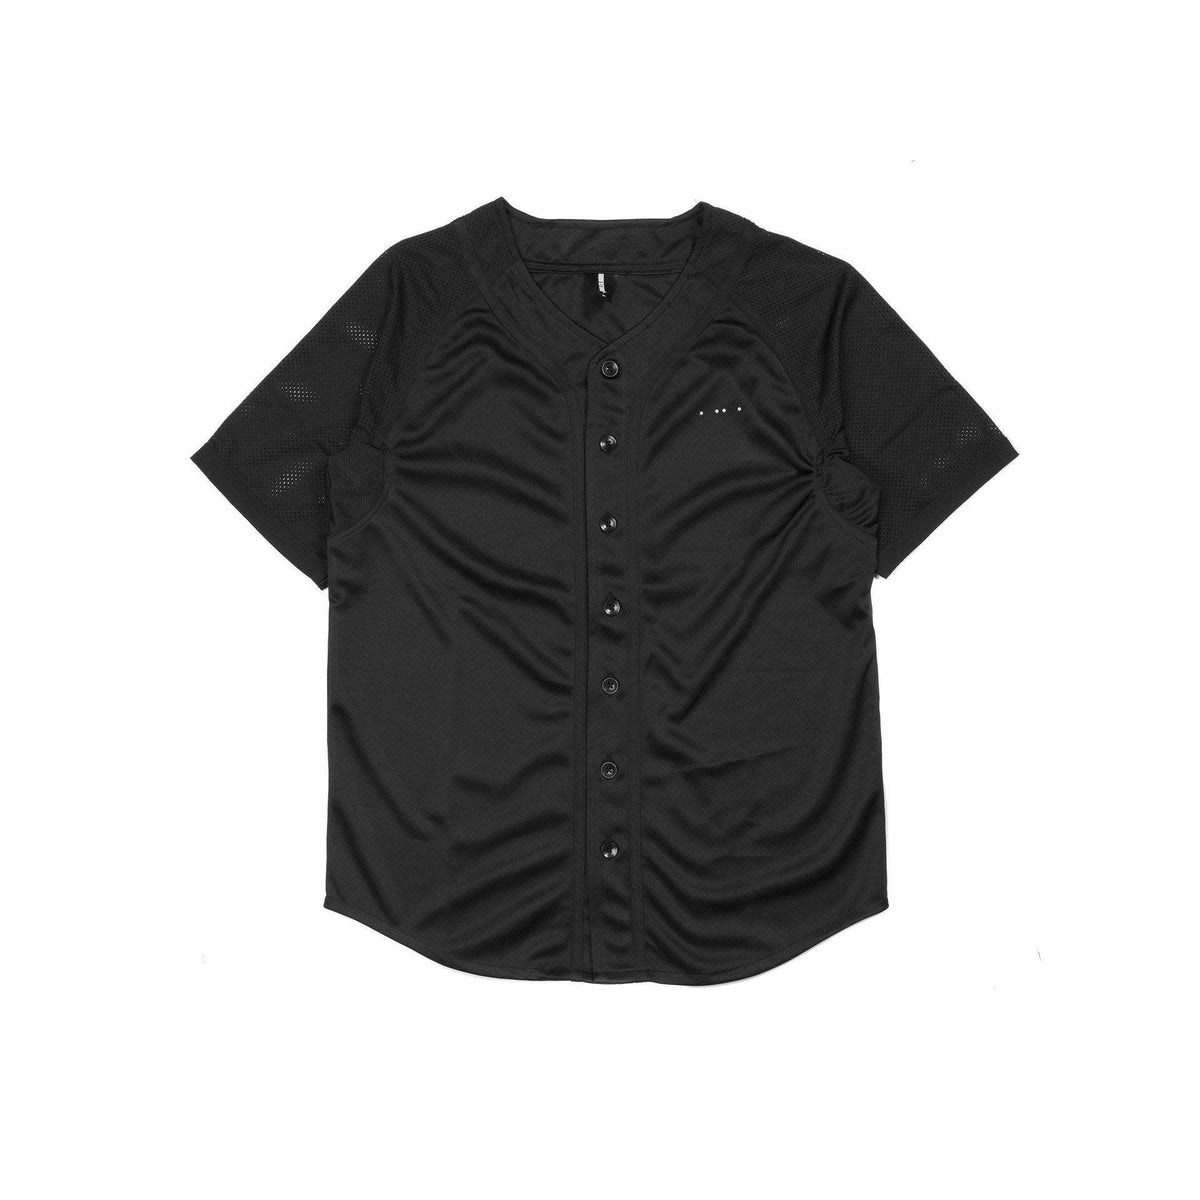 Publish Vaugh Button Shirt Black P1402017-BLK - CLOTHING - Solestop.com - Canada